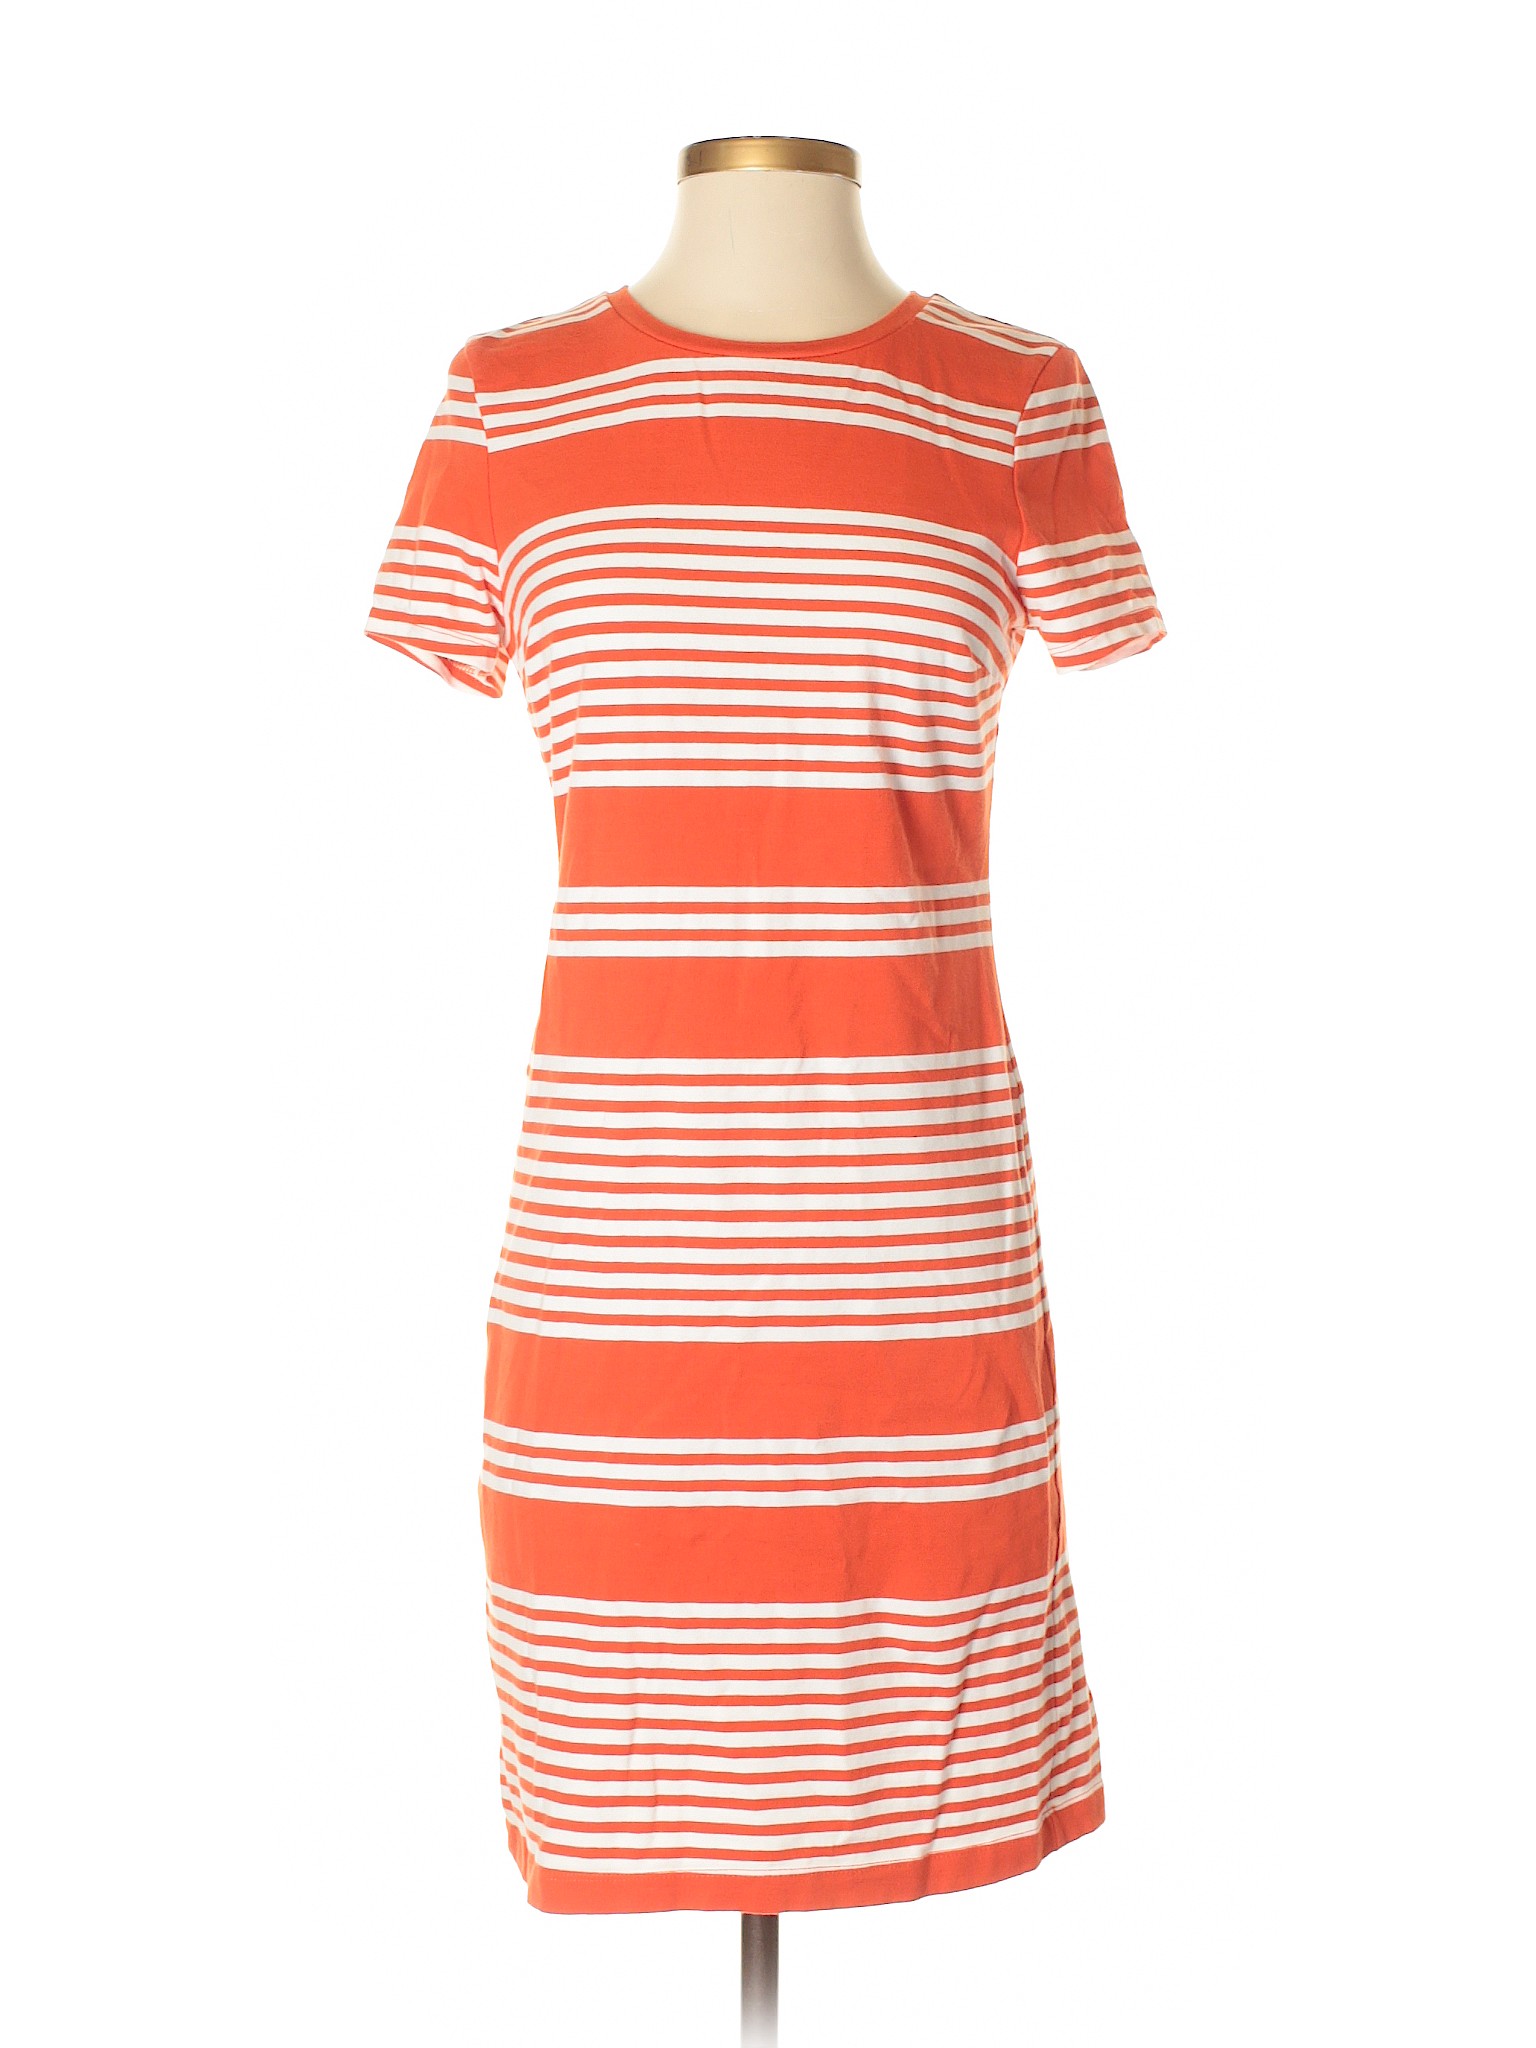 Old Navy Stripes Orange Casual Dress Size S - 83% off | thredUP